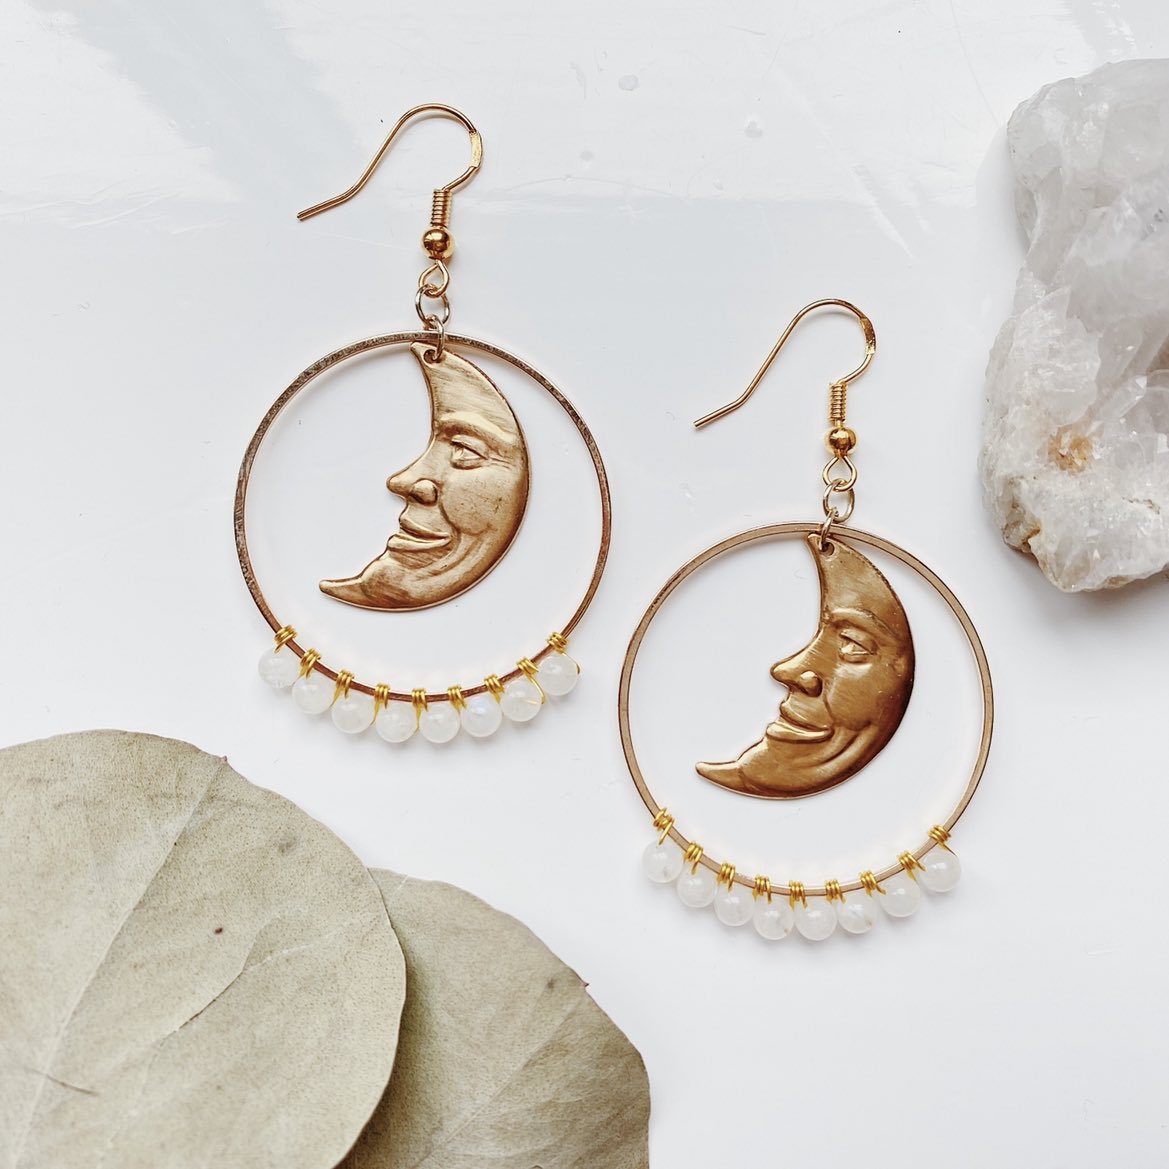  the over the moon bundle Moonstone Palmstone + earrings // $28